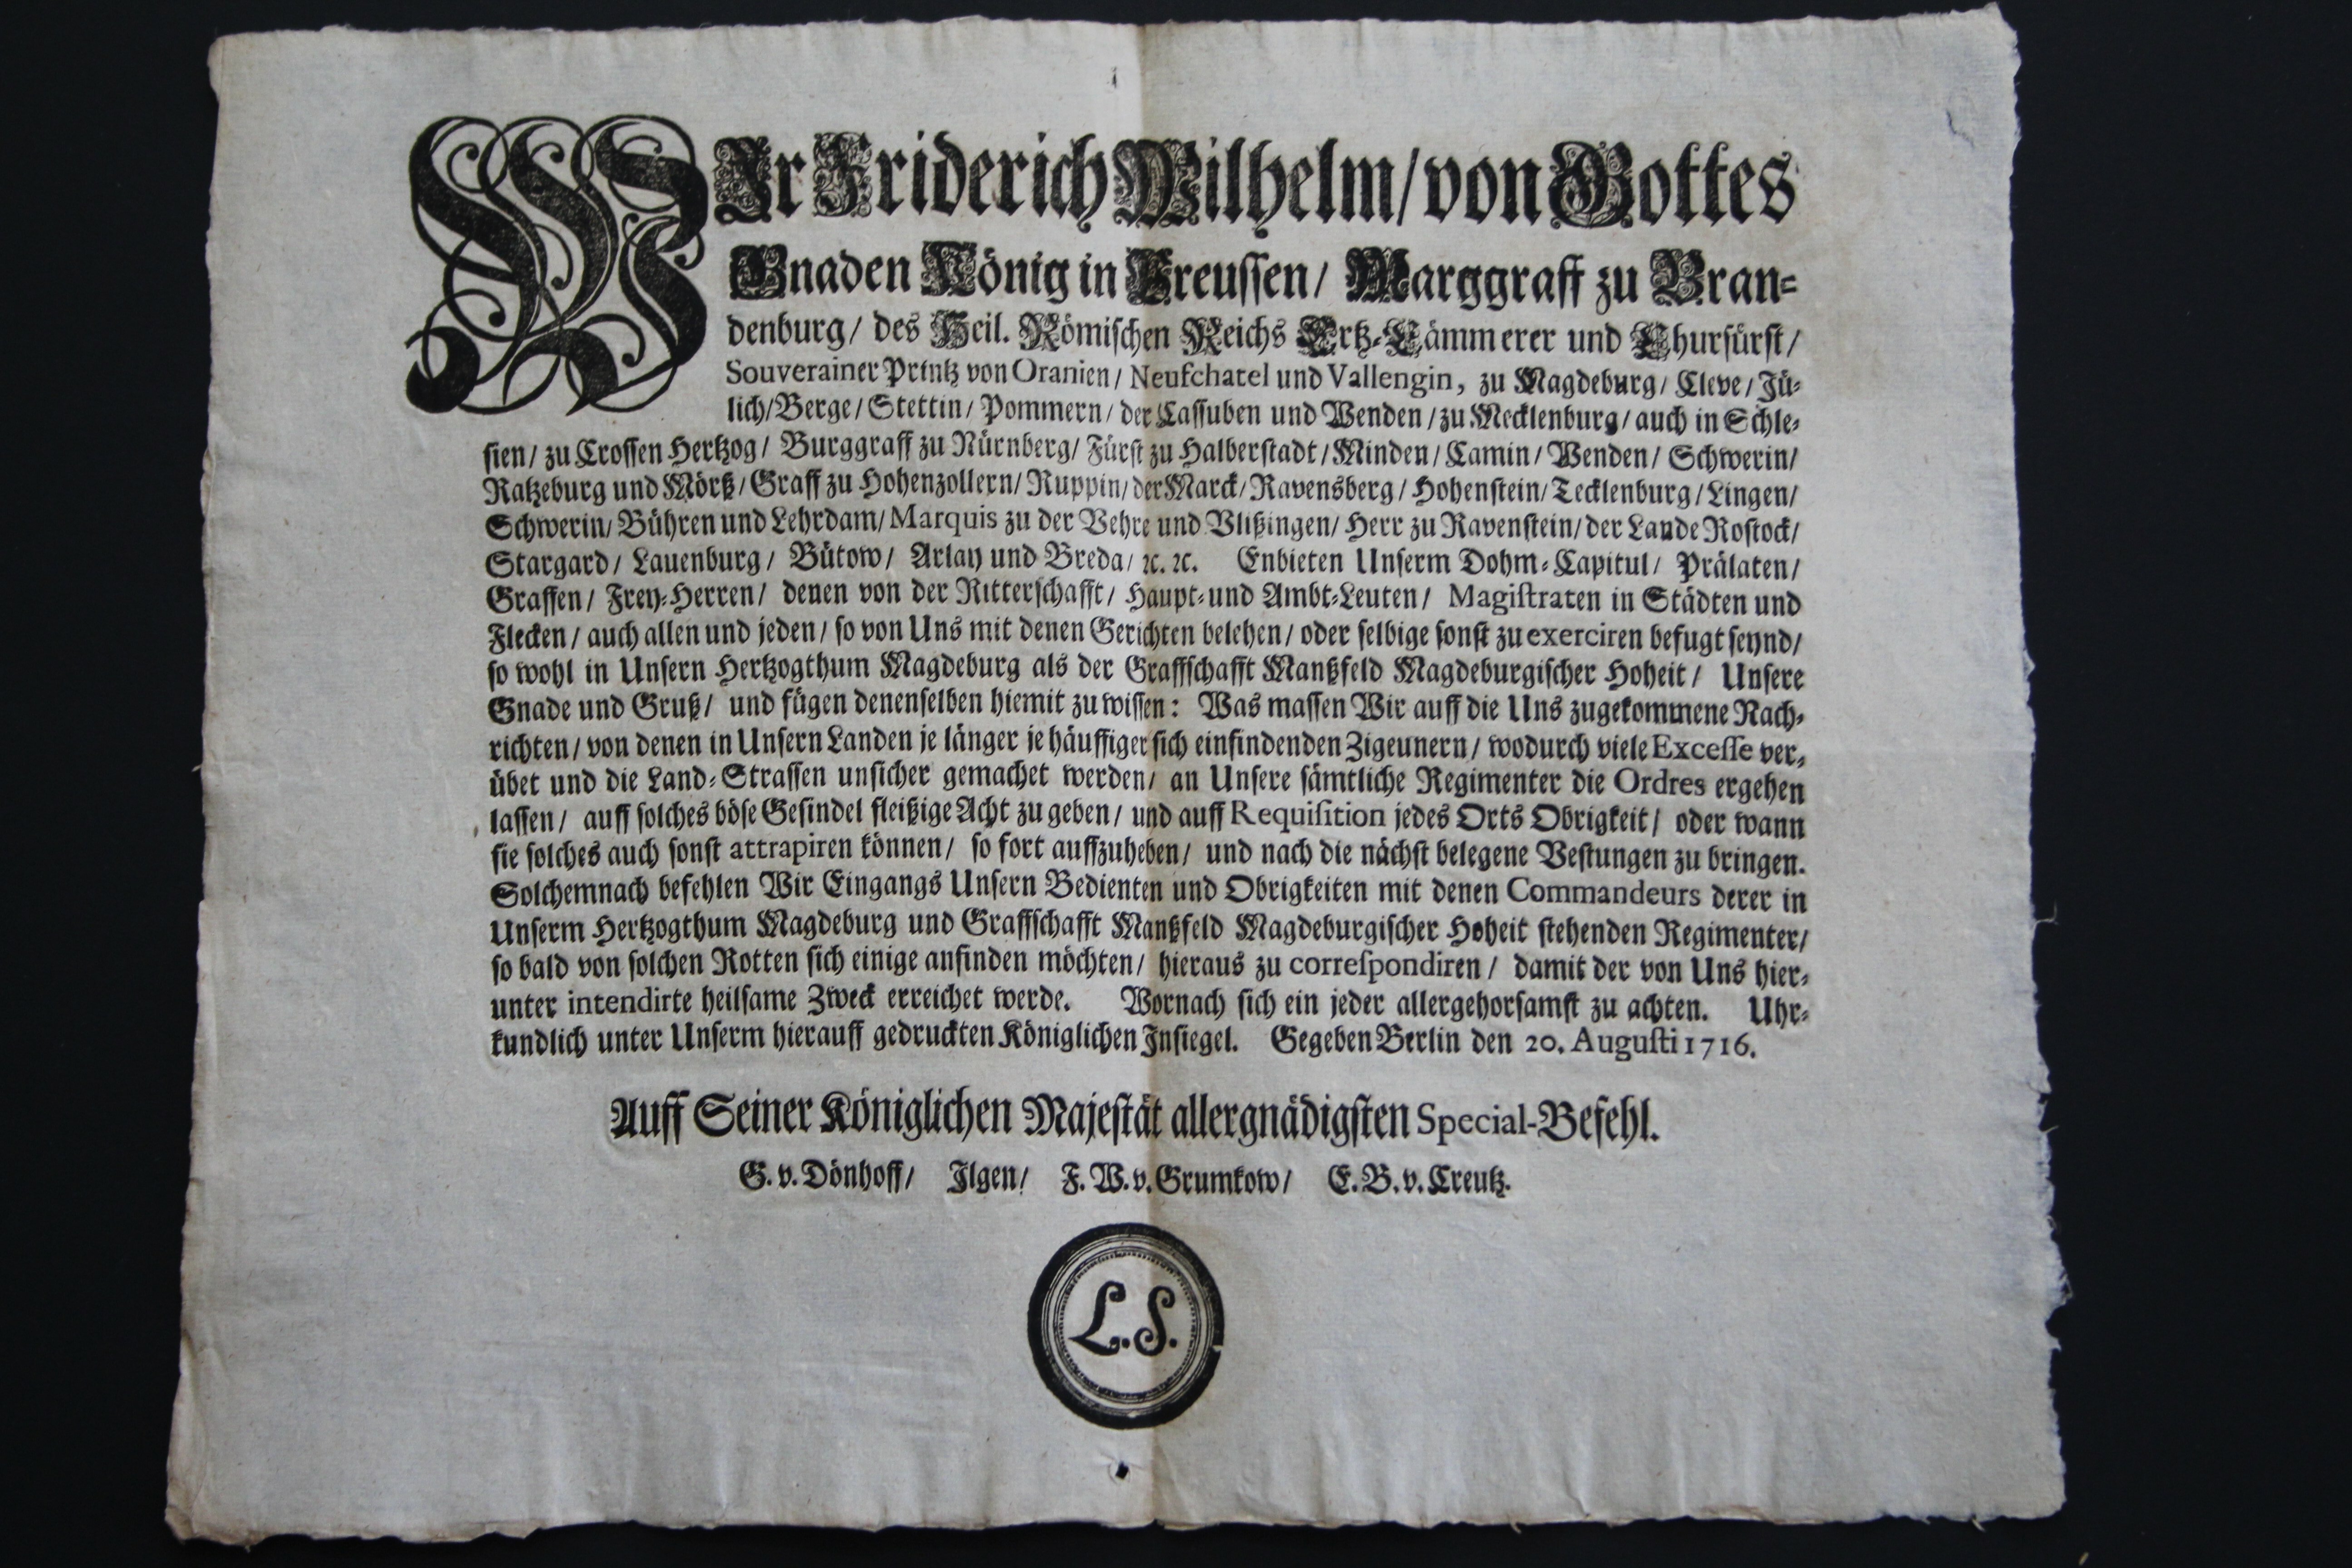 Sofortiger Haftbefehl für [Zigeuner] 1716 (Prignitz-Museum CC BY-NC-SA)